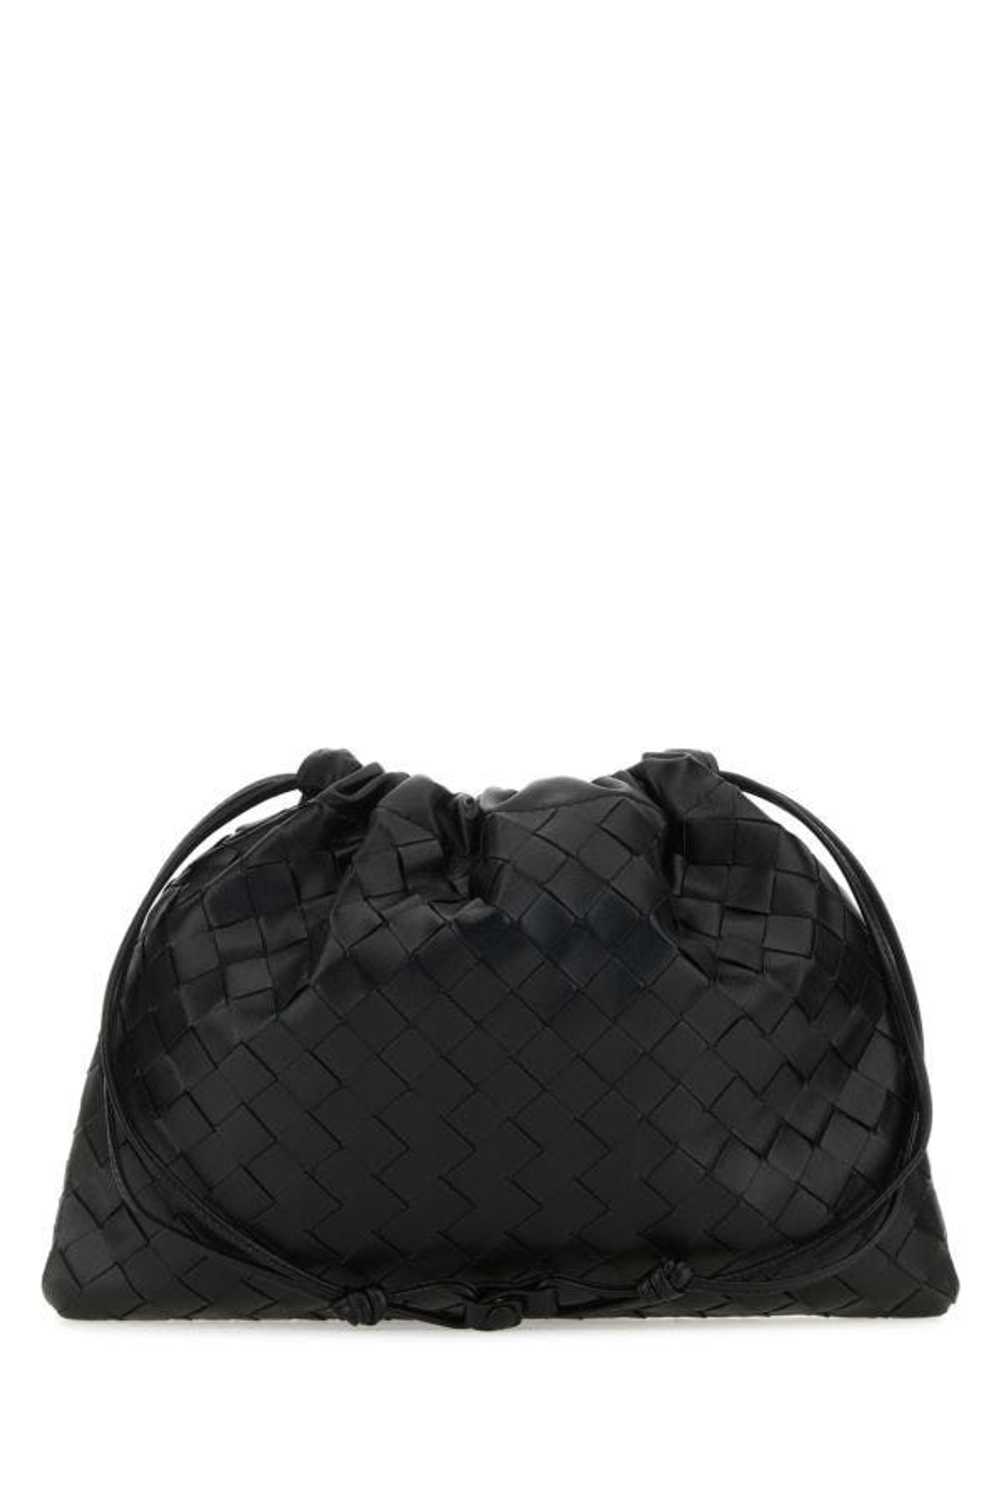 Bottega Veneta Black Leather Medium Clutch - image 3